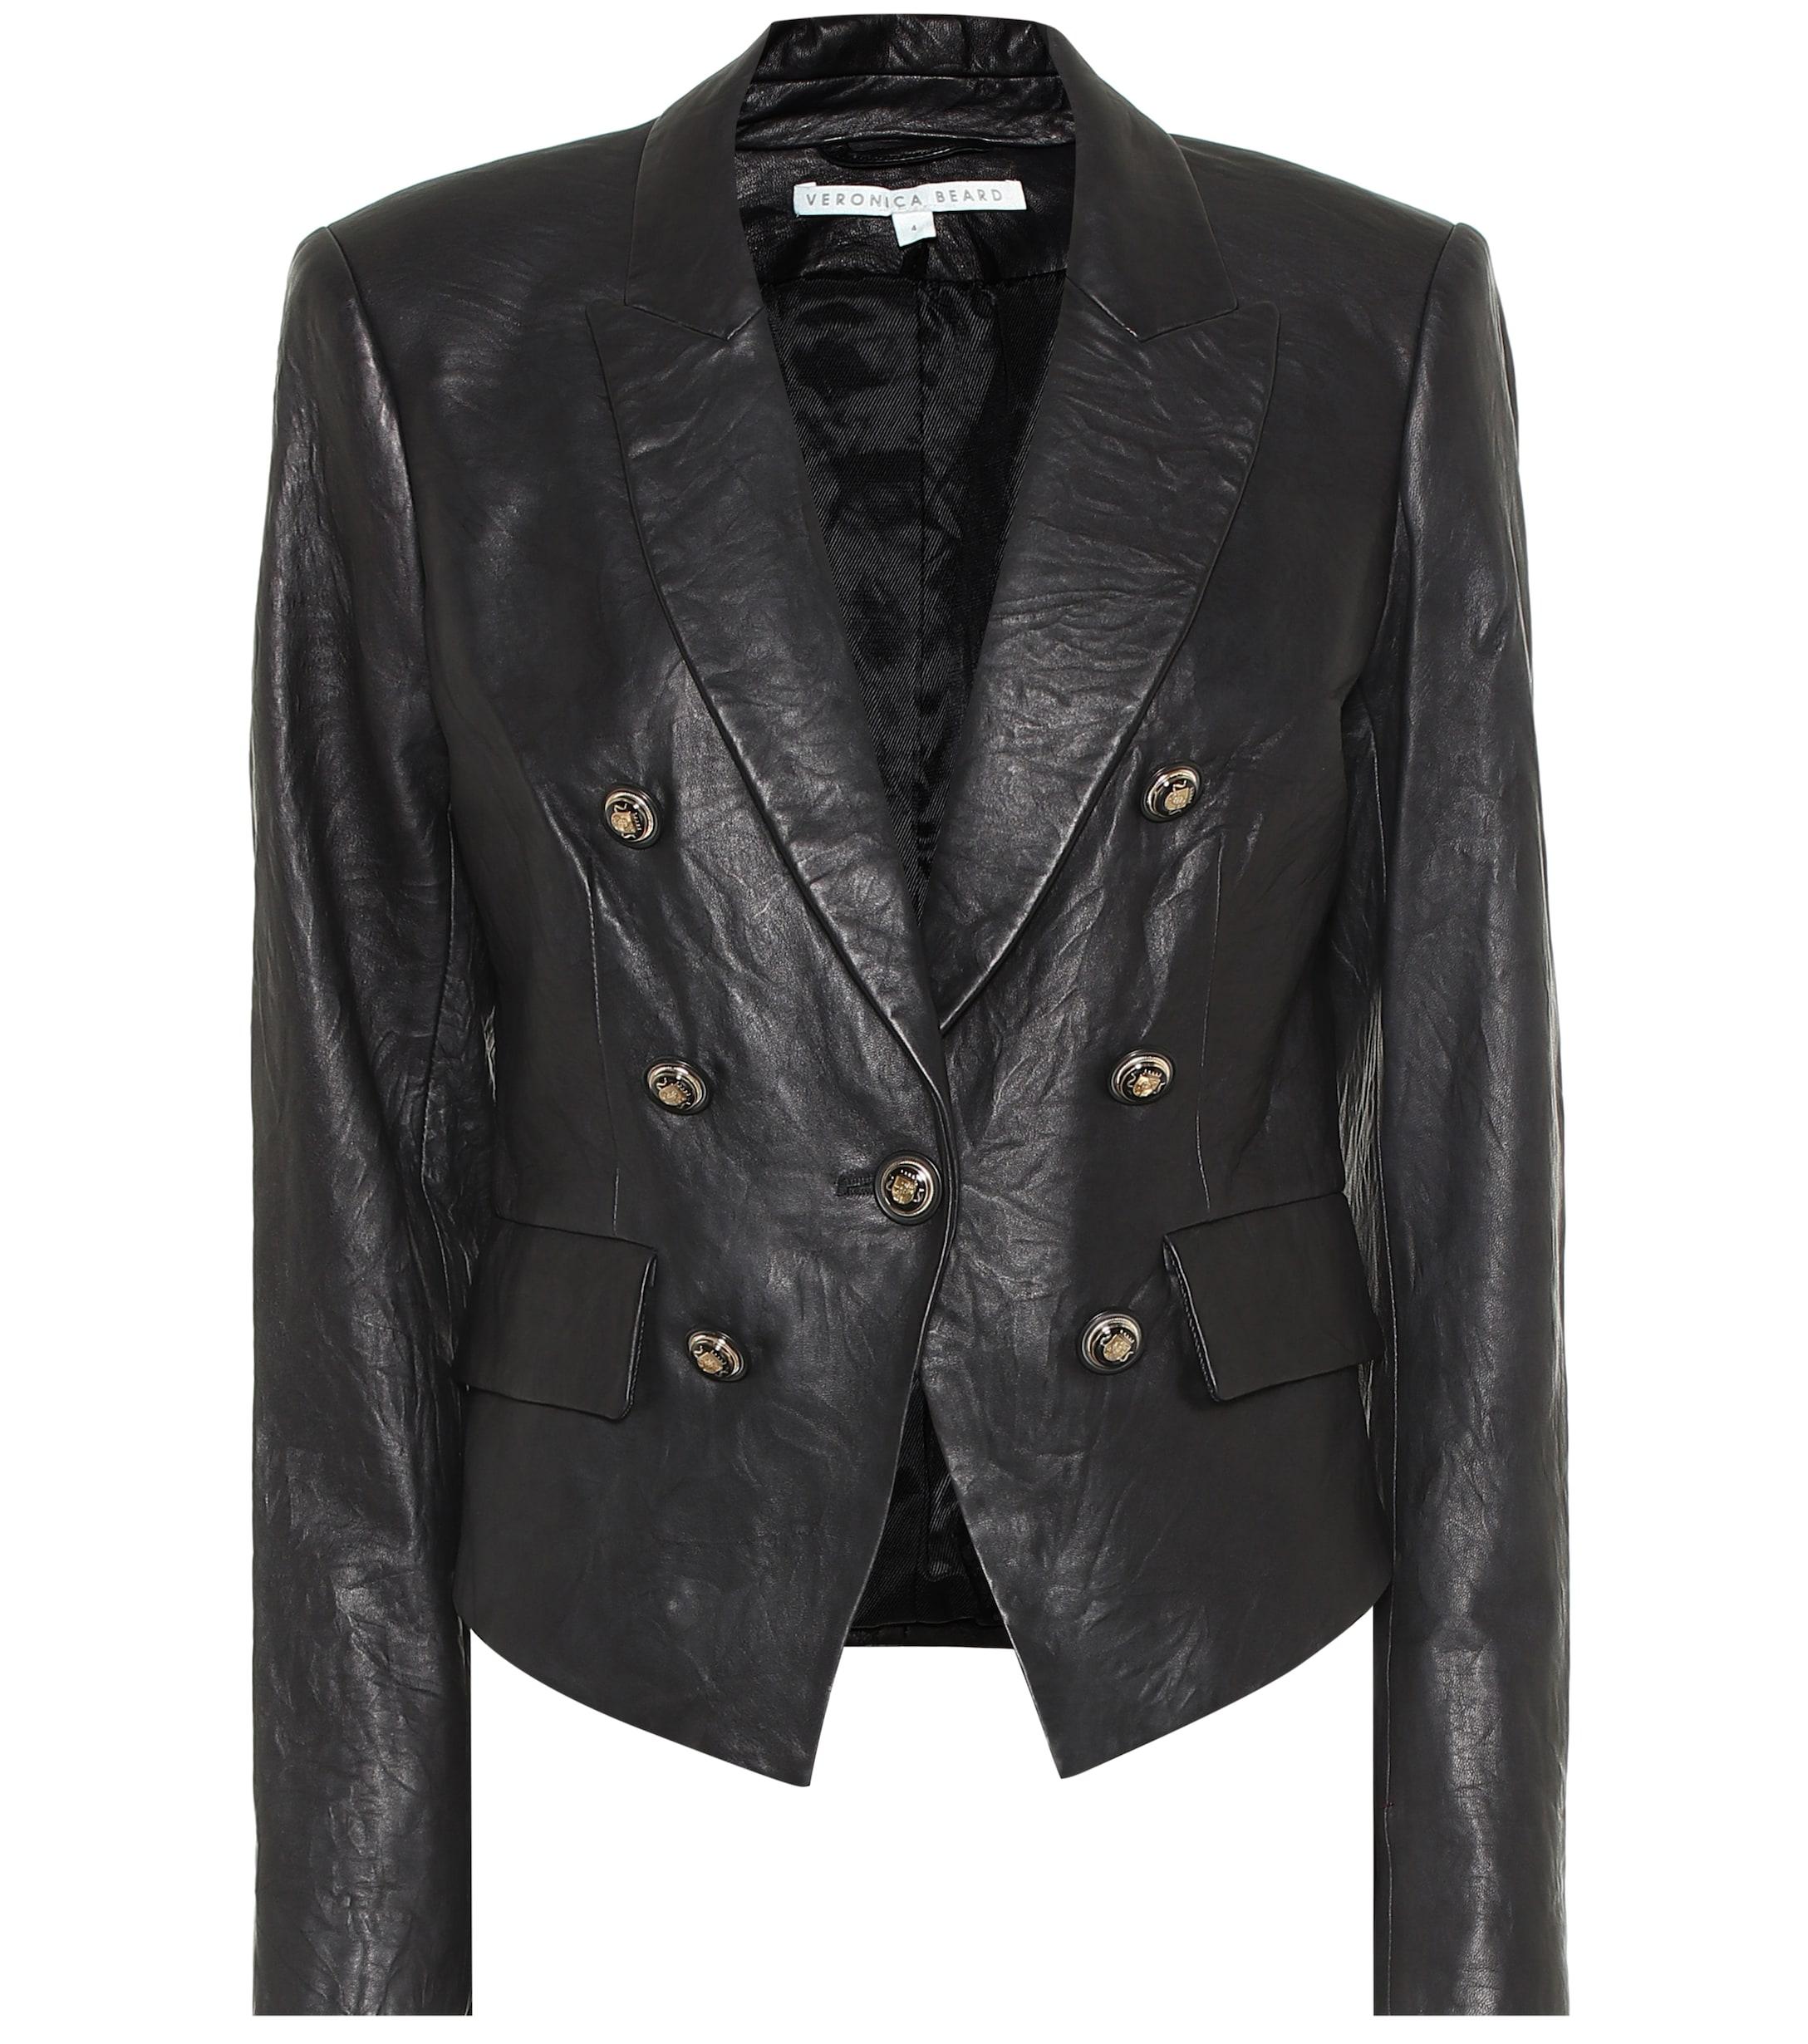 Veronica Beard Cooke Dickey Leather Blazer in Black - Lyst